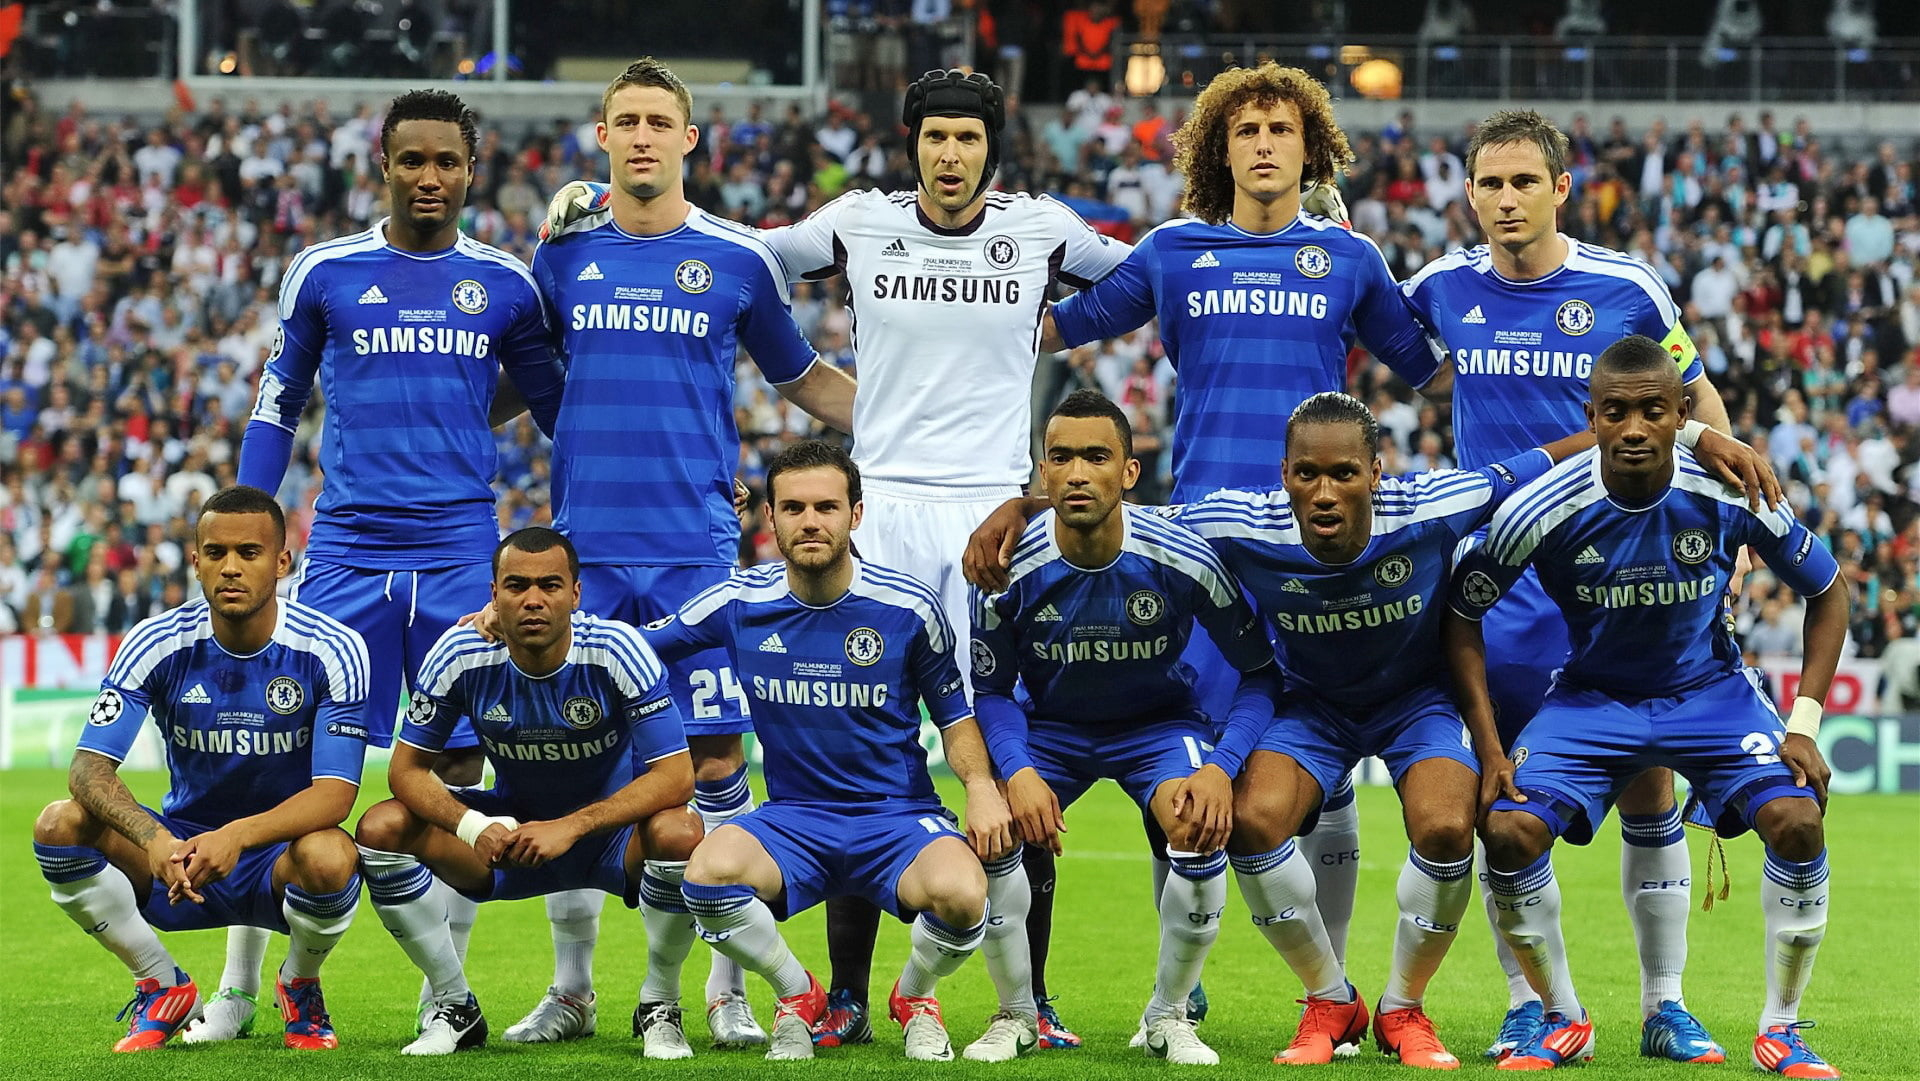 Chelsea FC wallpaper, Champions League Final, men's blue Samsung jersey